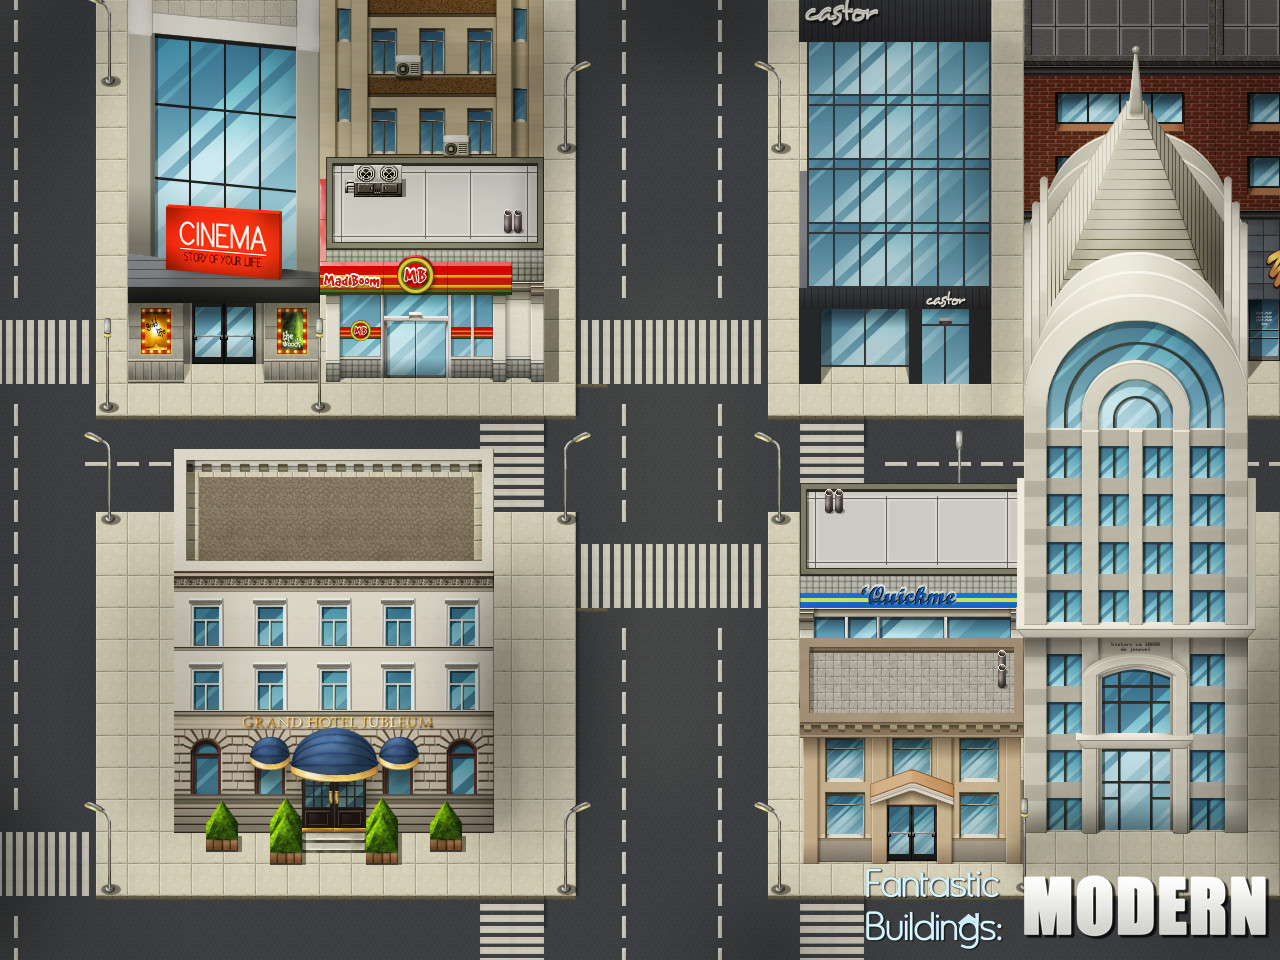 (5.07$) RPG Maker VX - Ace Fantastic Buildings: Modern DLC EU Steam CD Key